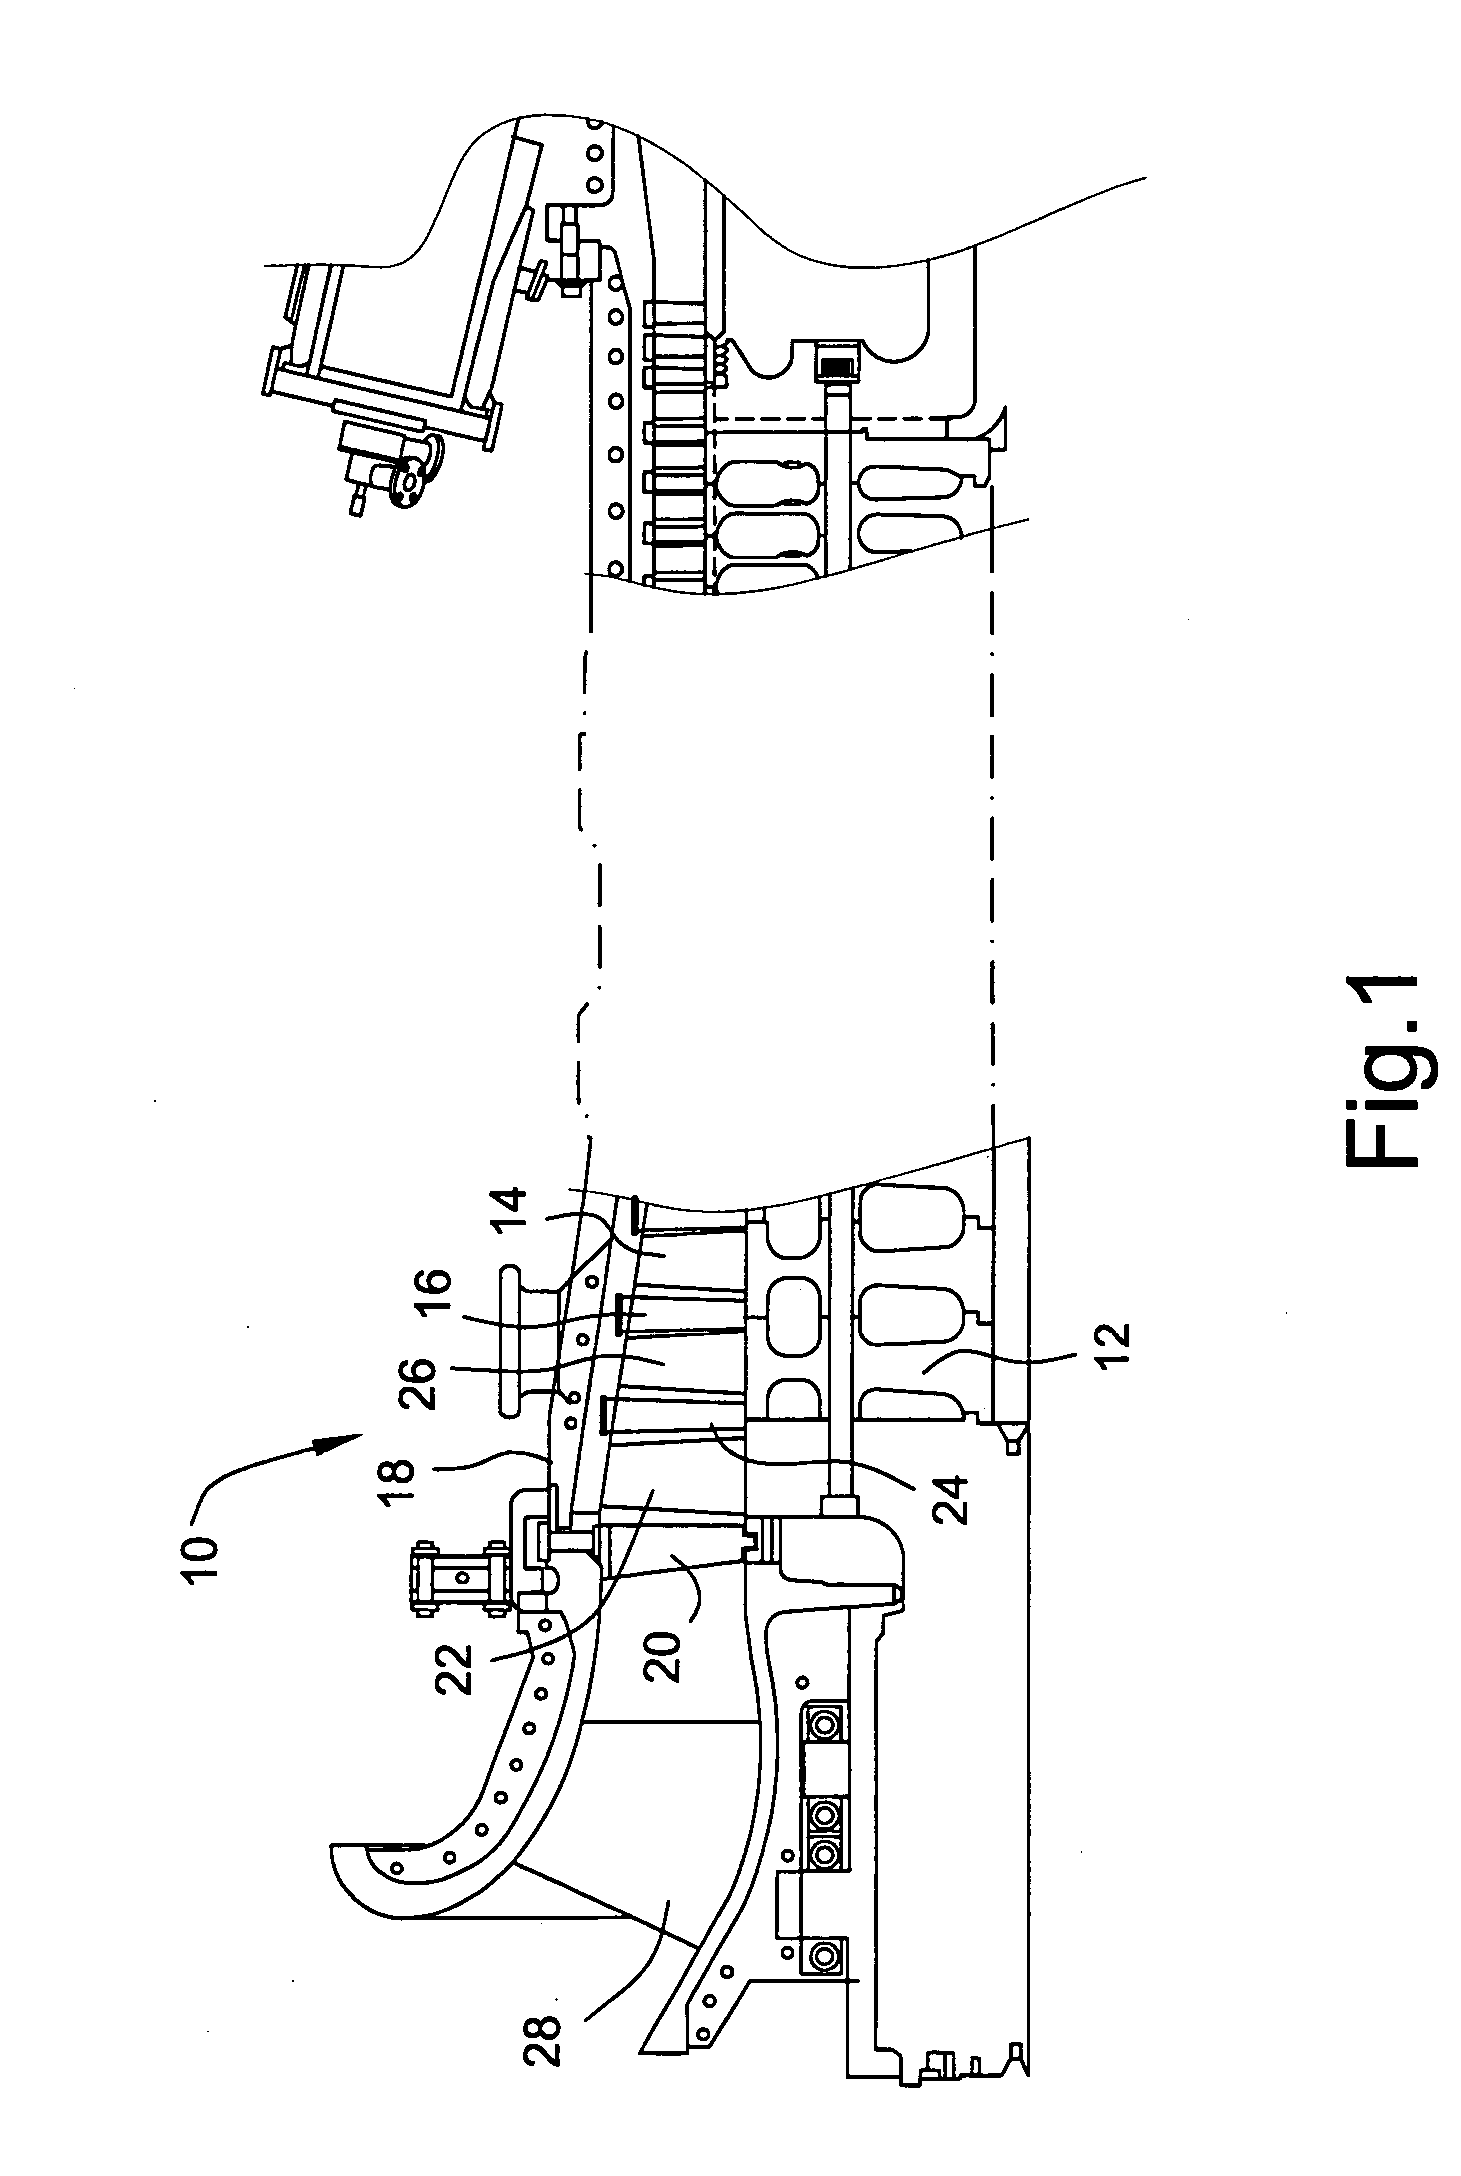 Method of providing non-uniform stator vane spacing in a compressor